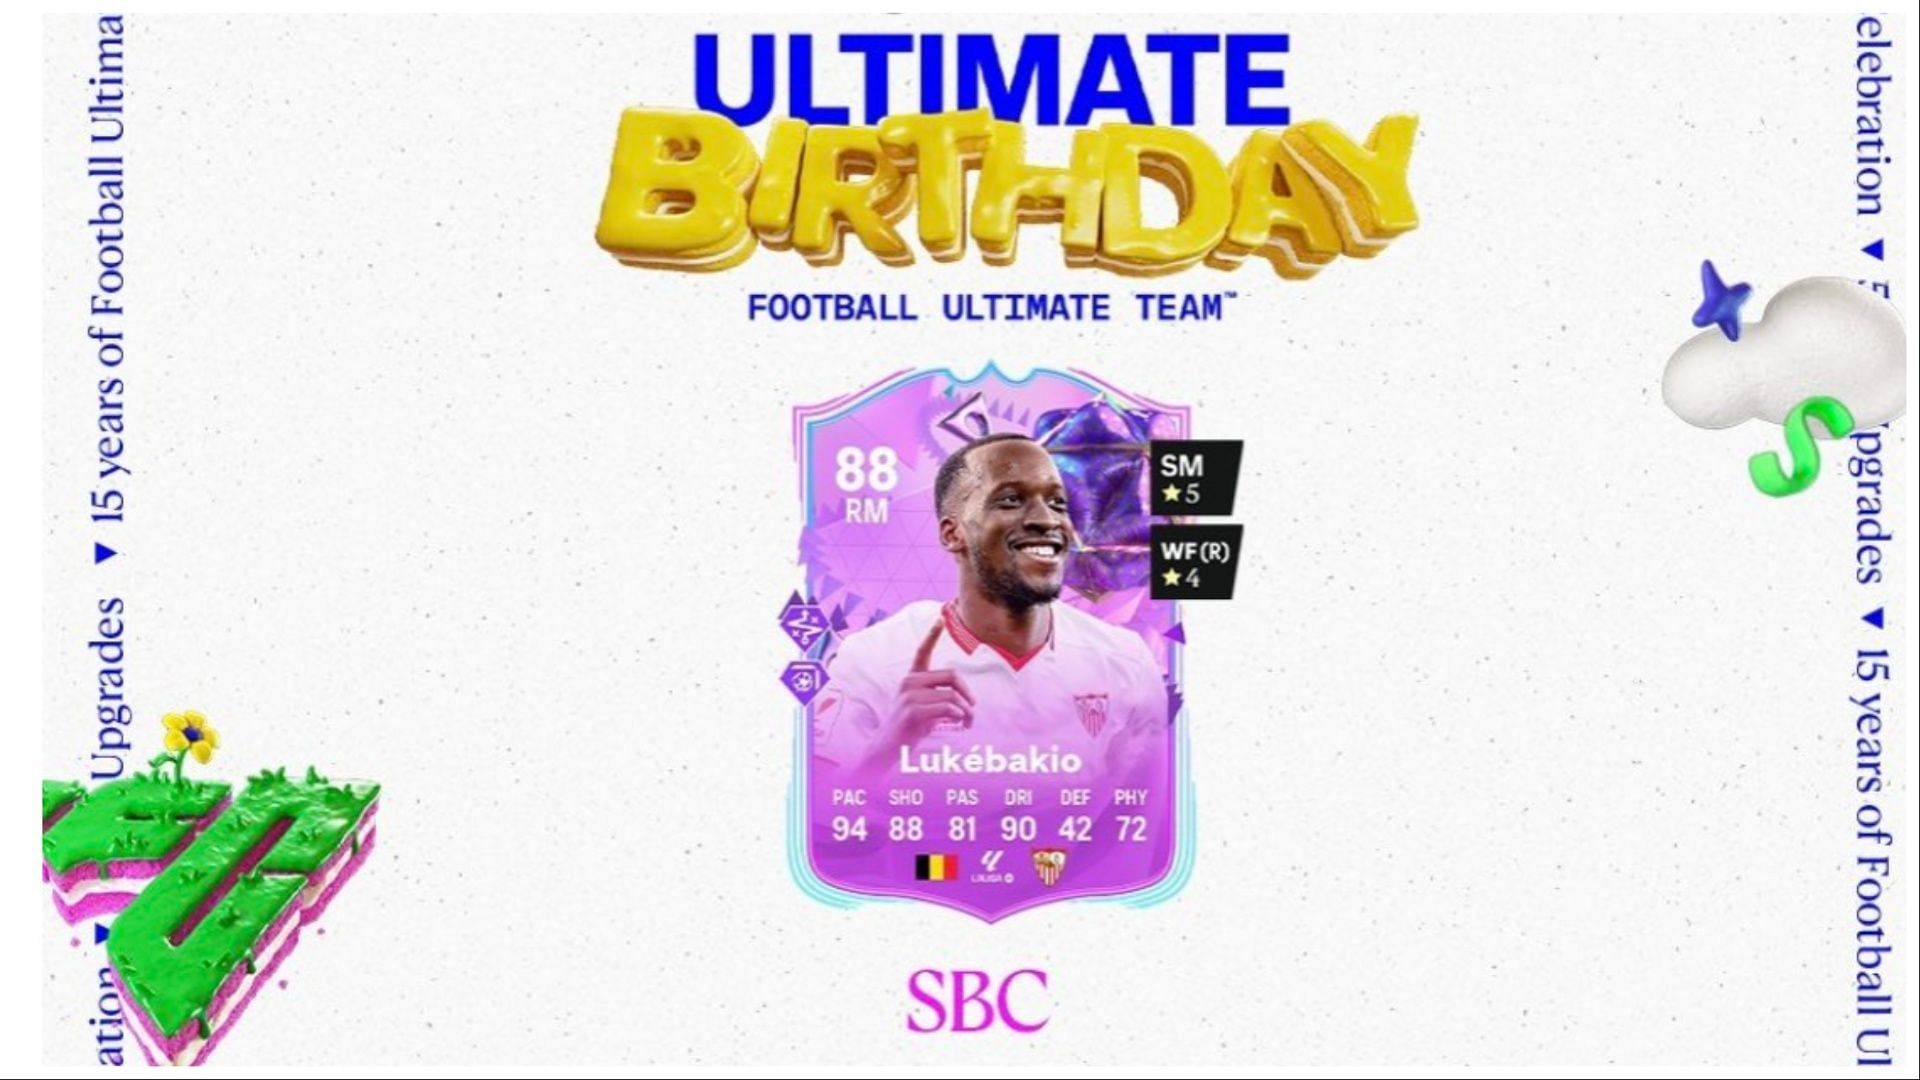 The EA FC Dodi Lukebakio Ultimate Birthday SBC is now live